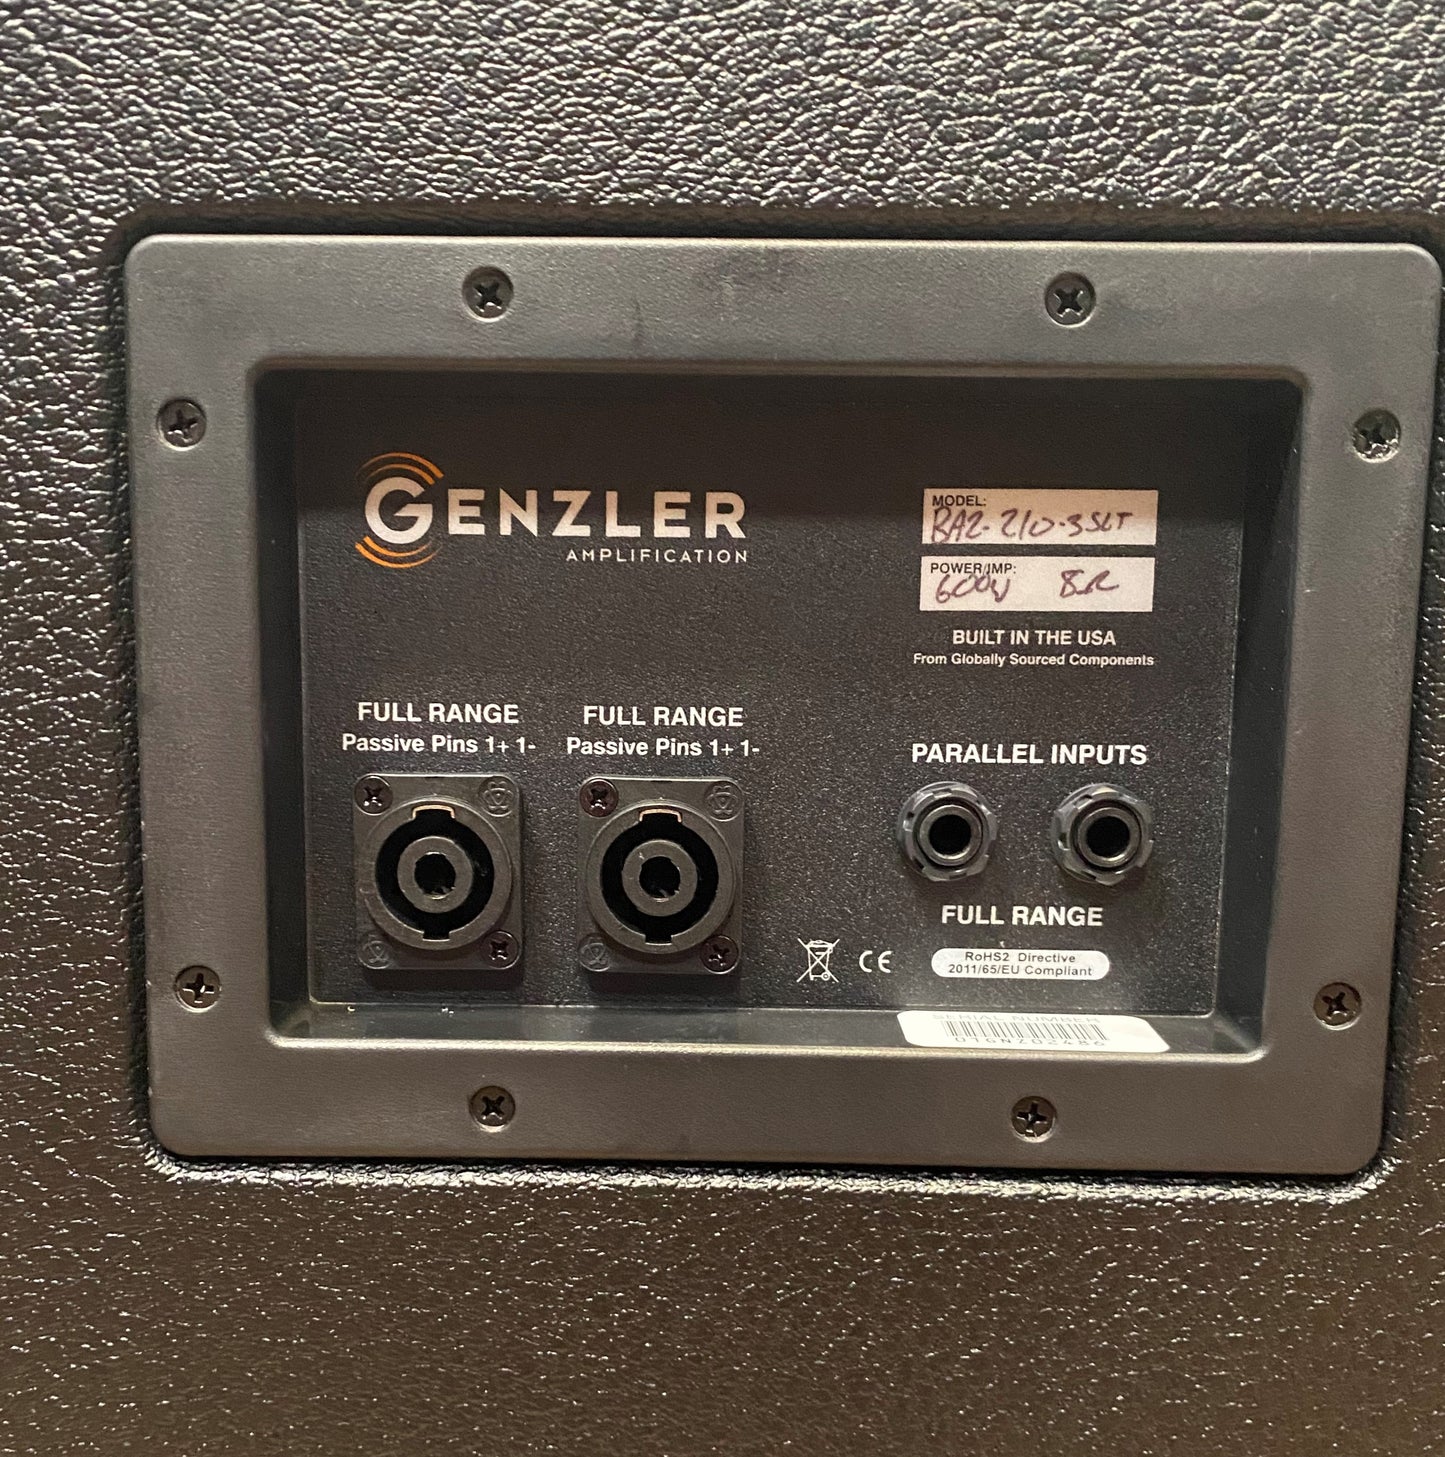 Genzler Amplification BA2-210-3SLT Series 2 2x10" 400 Watt Bass Array Speaker Cabinet Slant